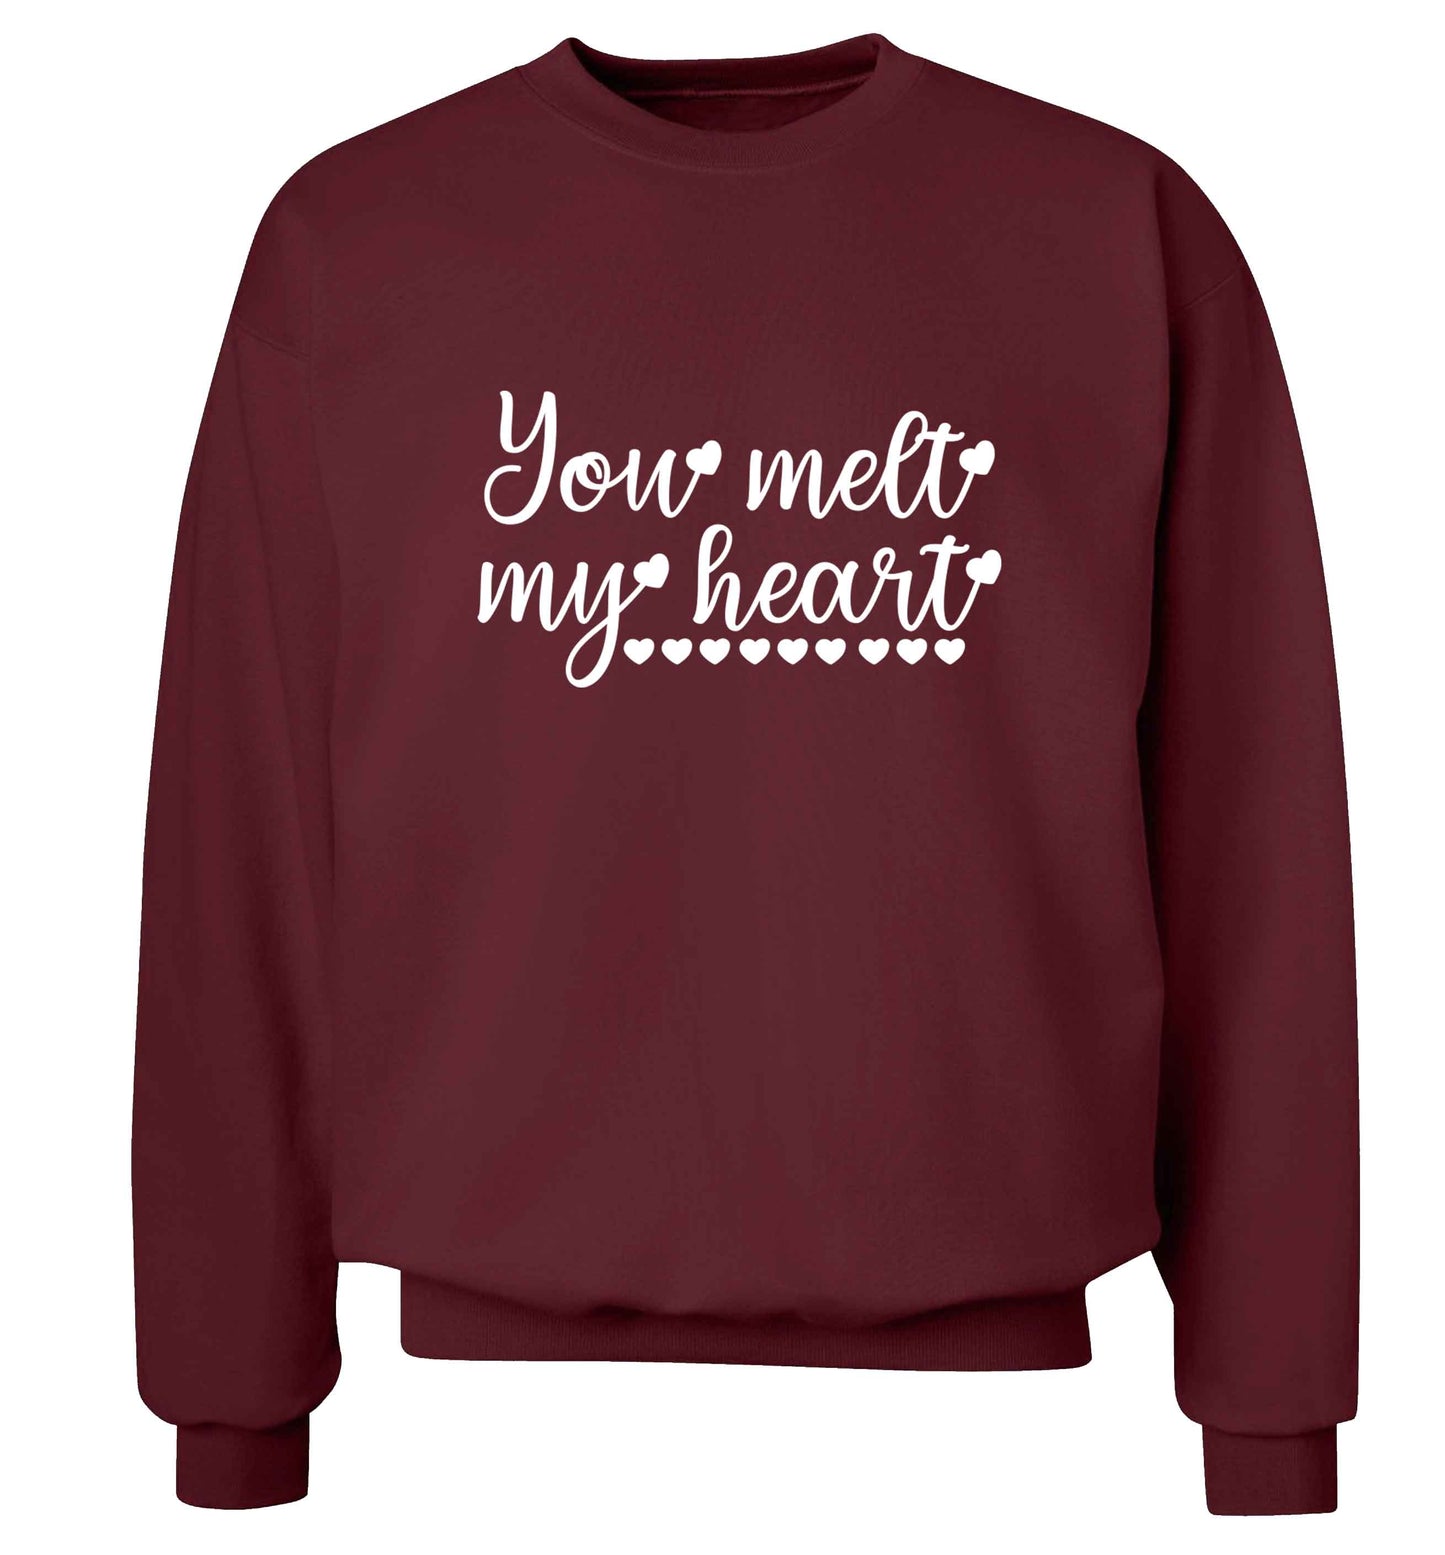 You melt my heart adult's unisex maroon sweater 2XL